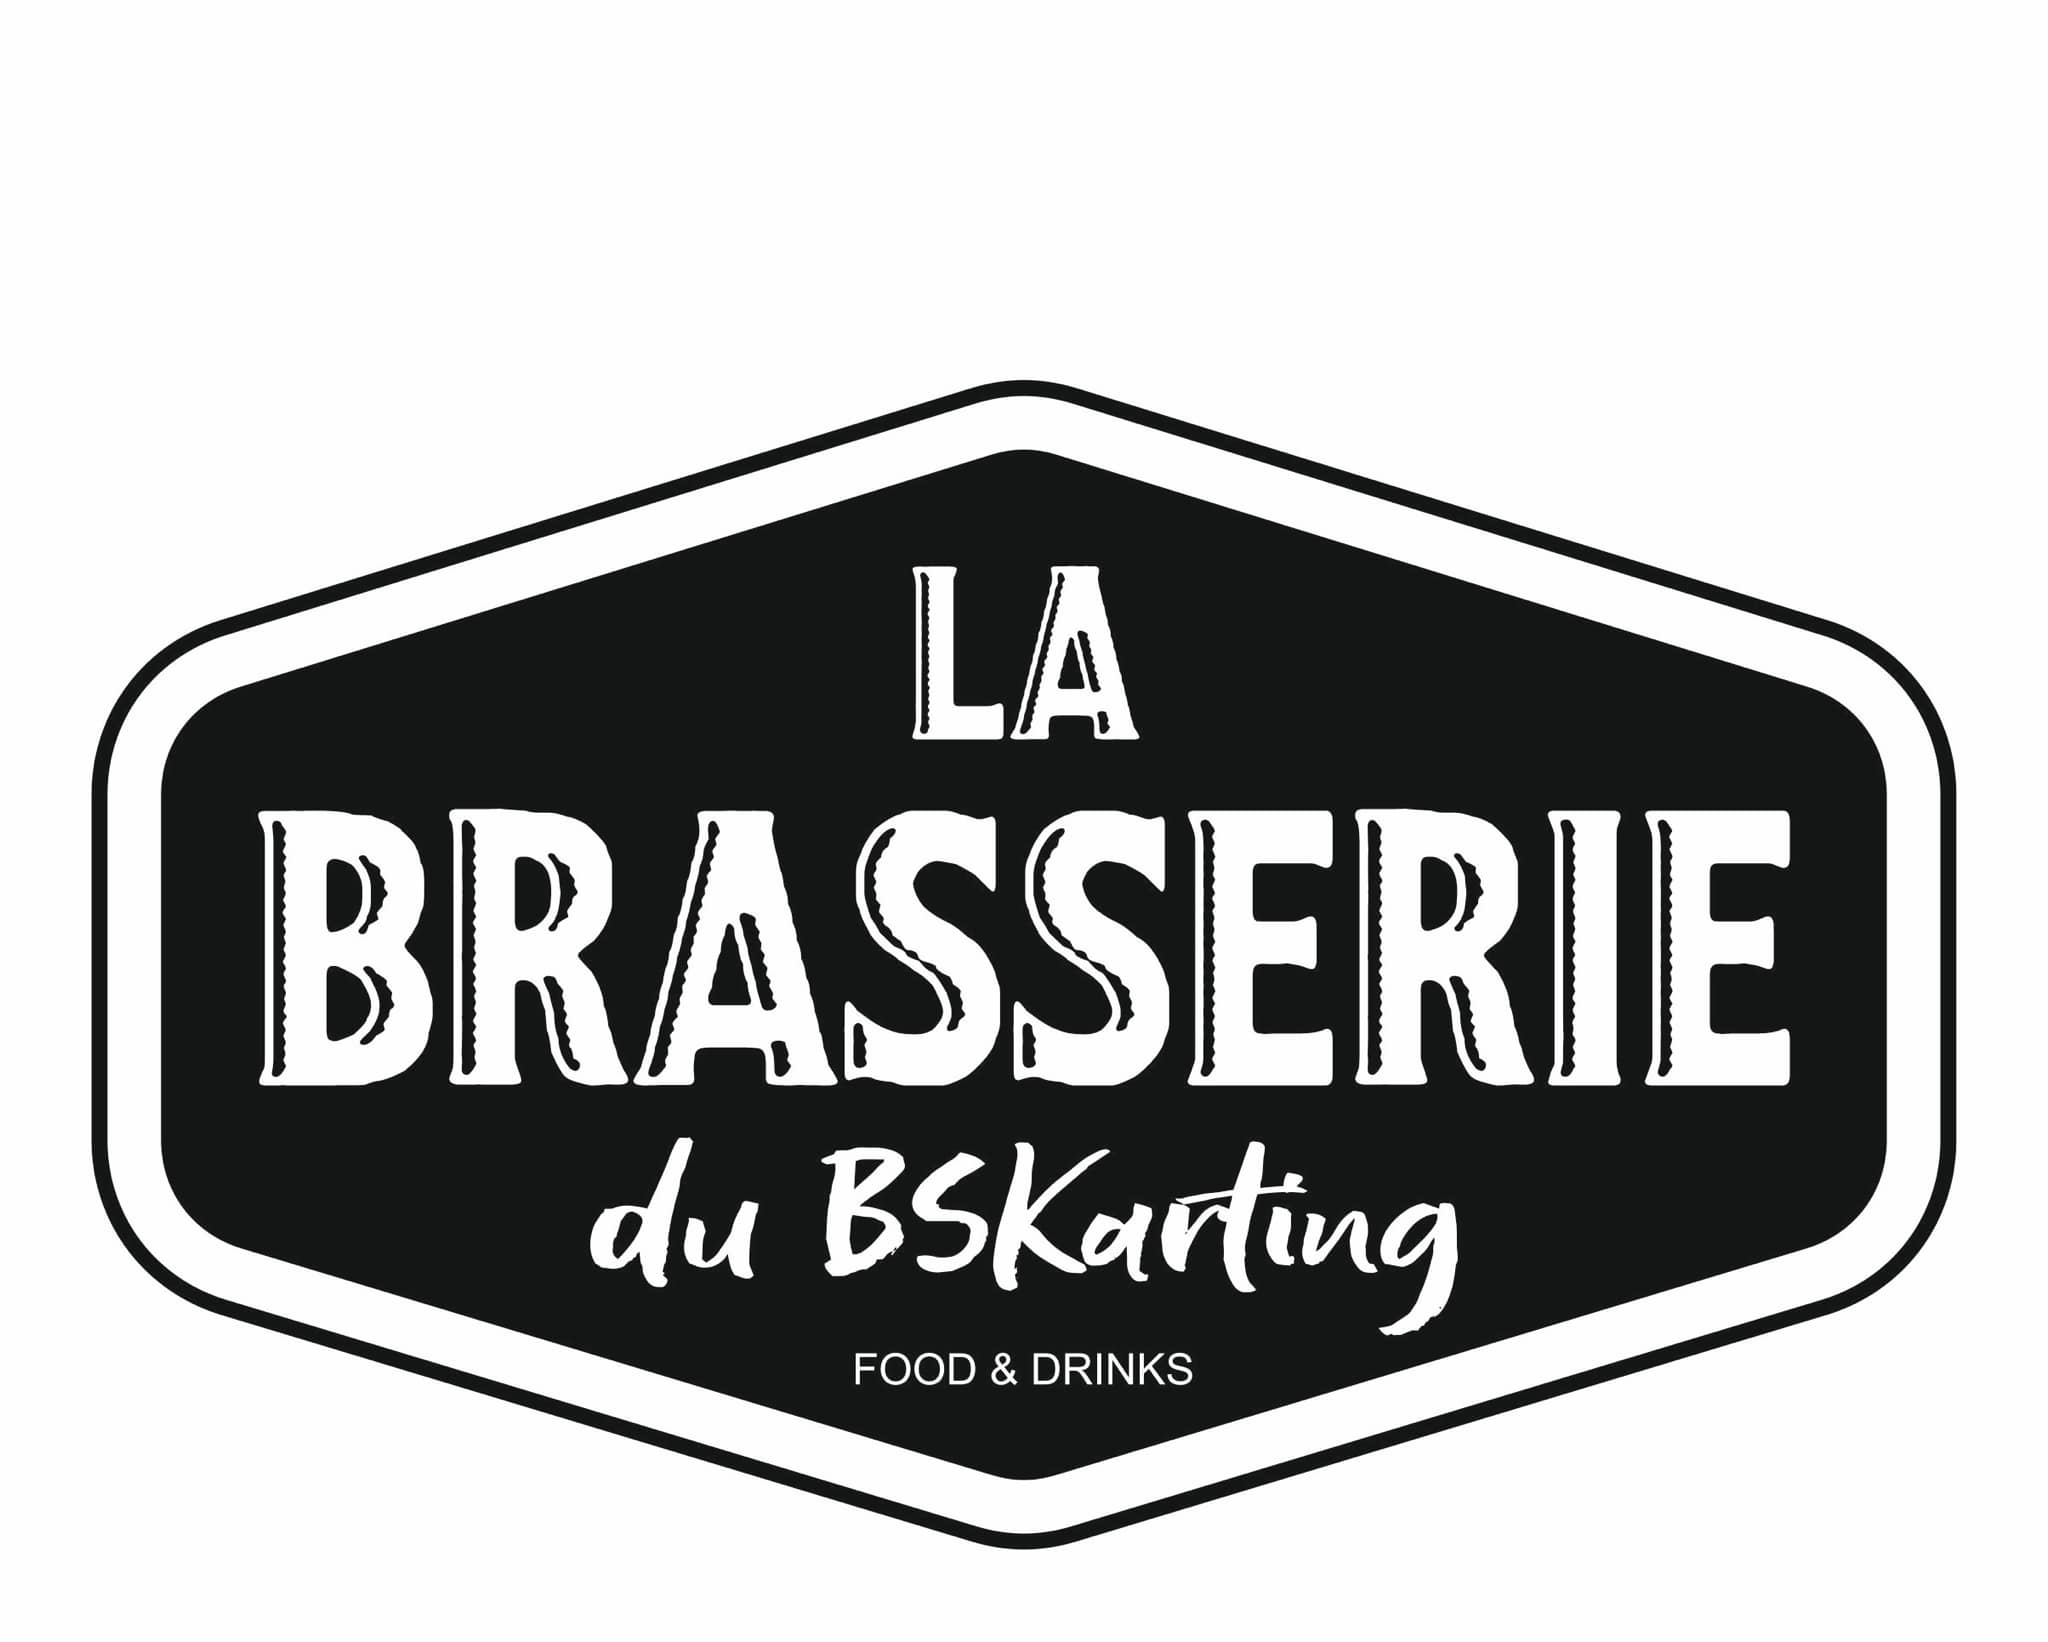 Brussels South Karting - News - La brasserie du BSKarting